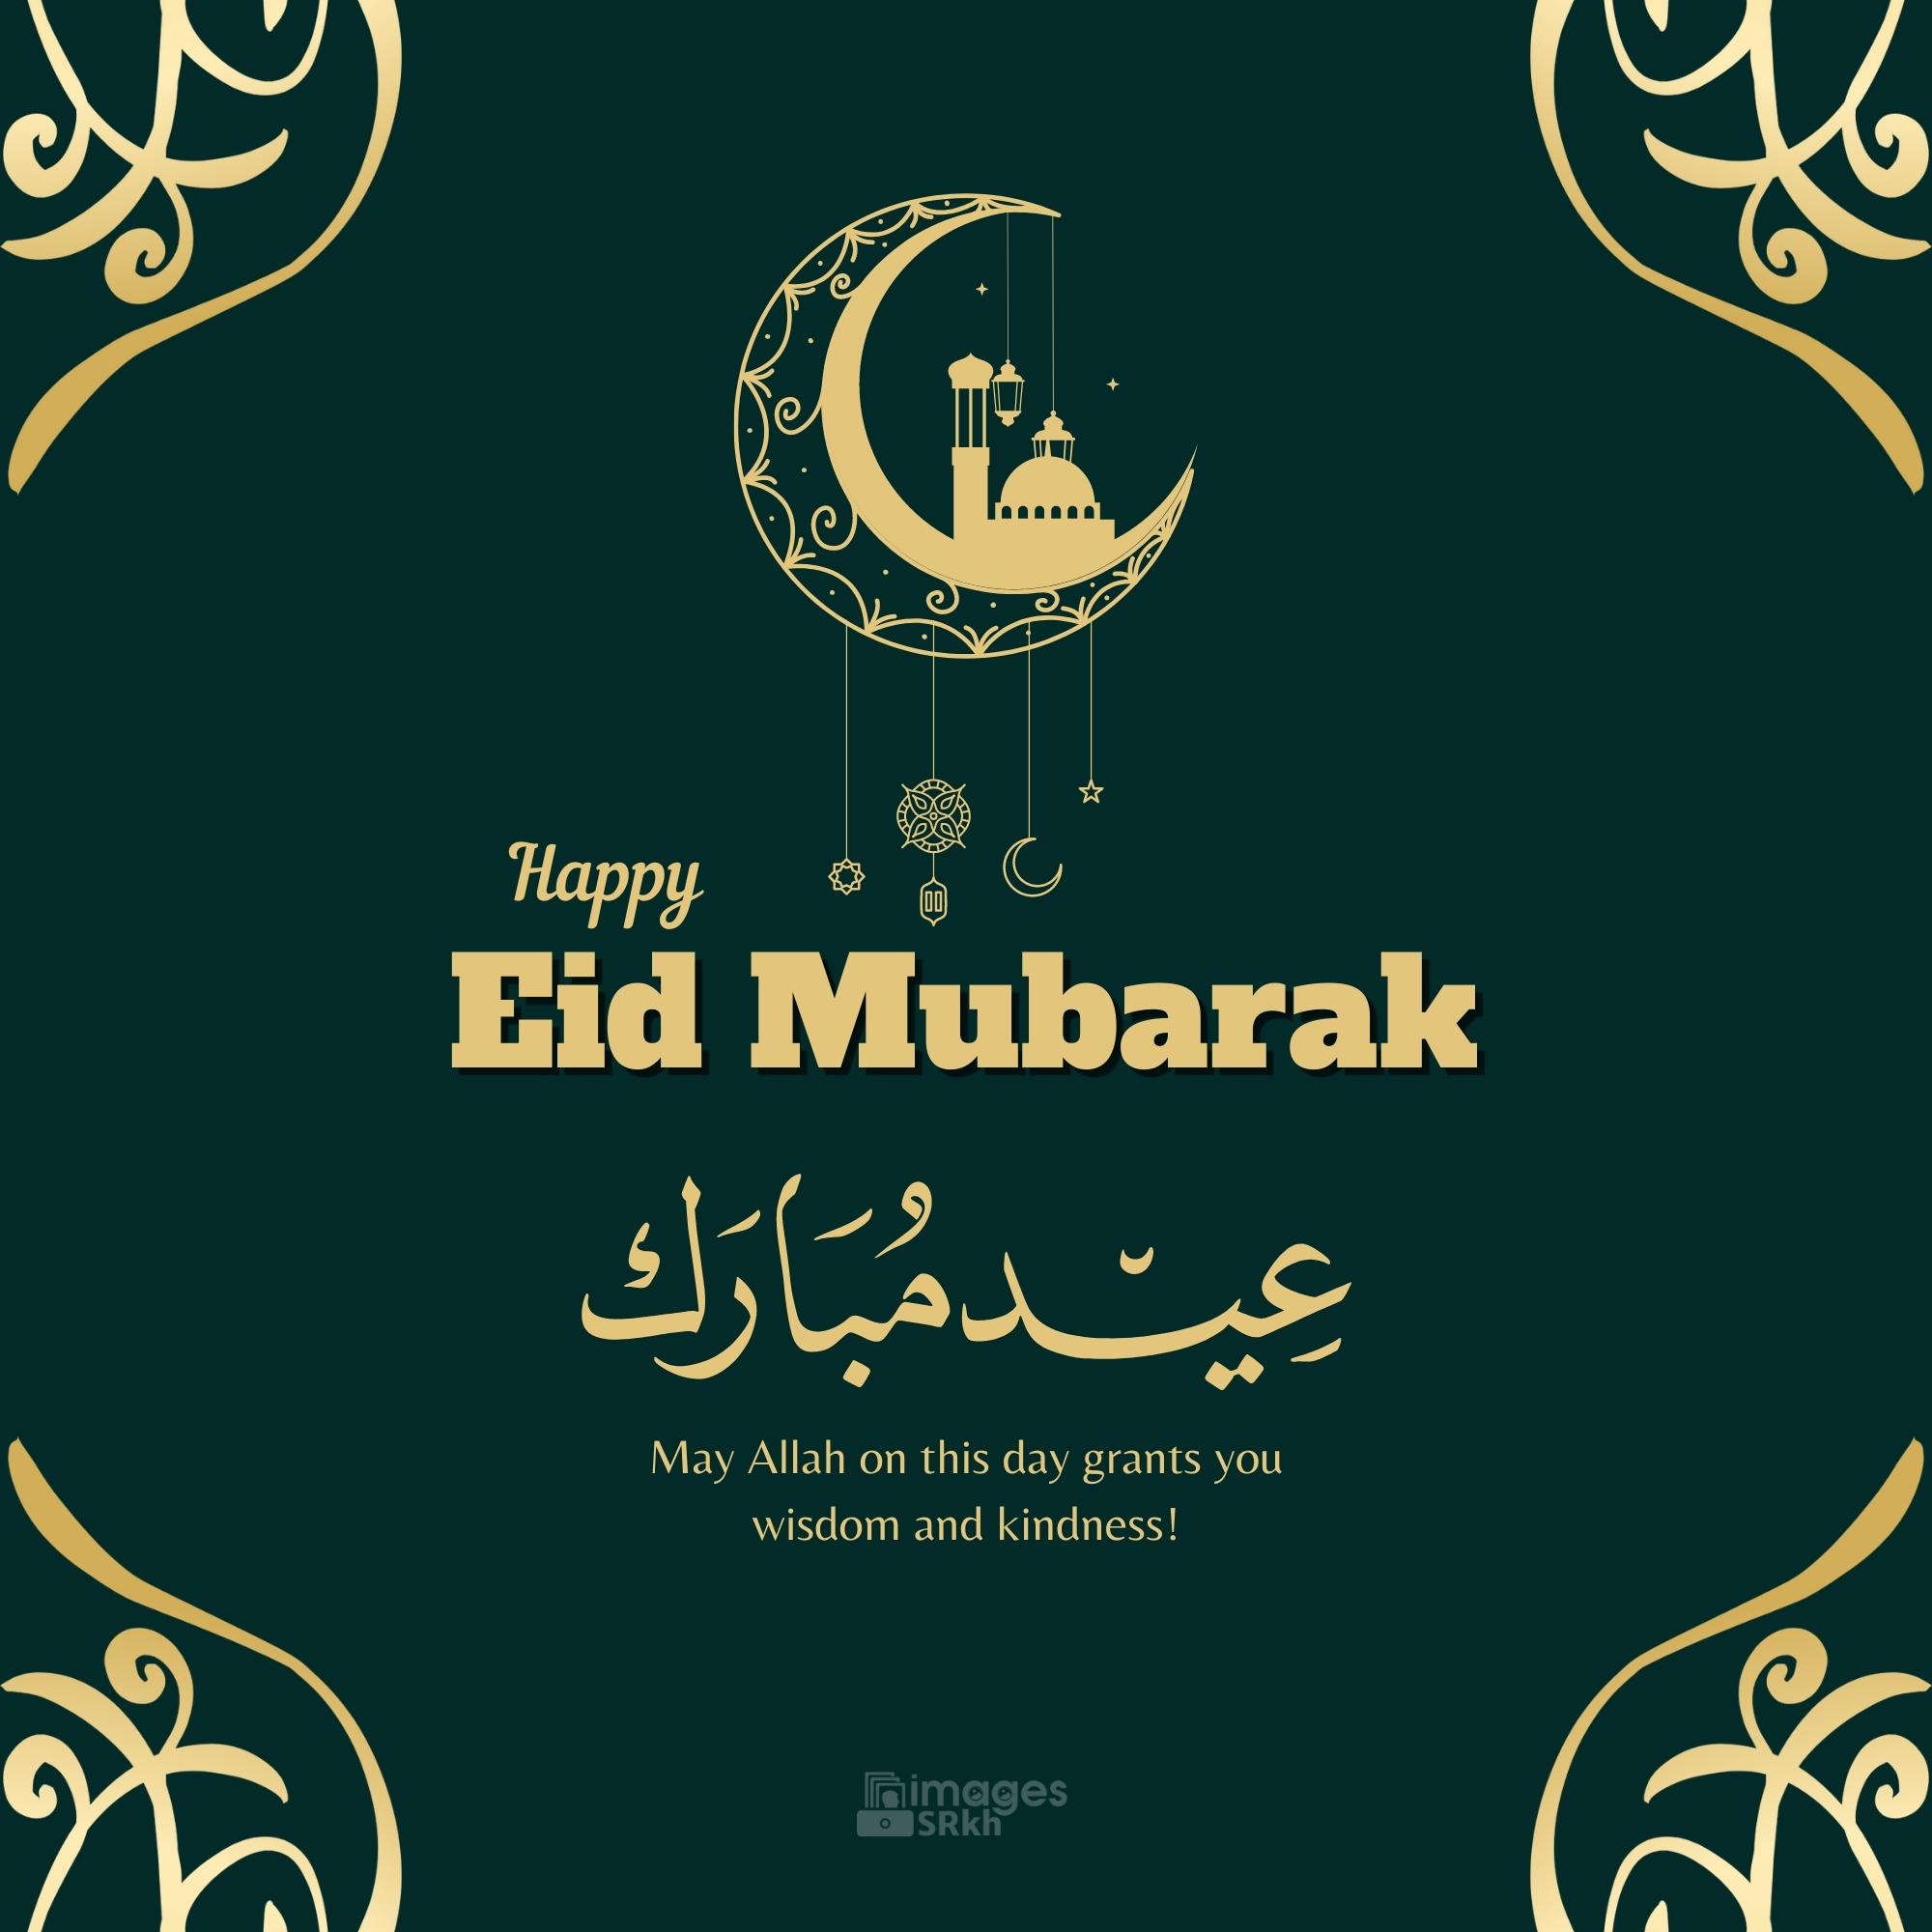 Eid Mubarak Photos (2) | Download free in Hd Quality | imagesSRkh